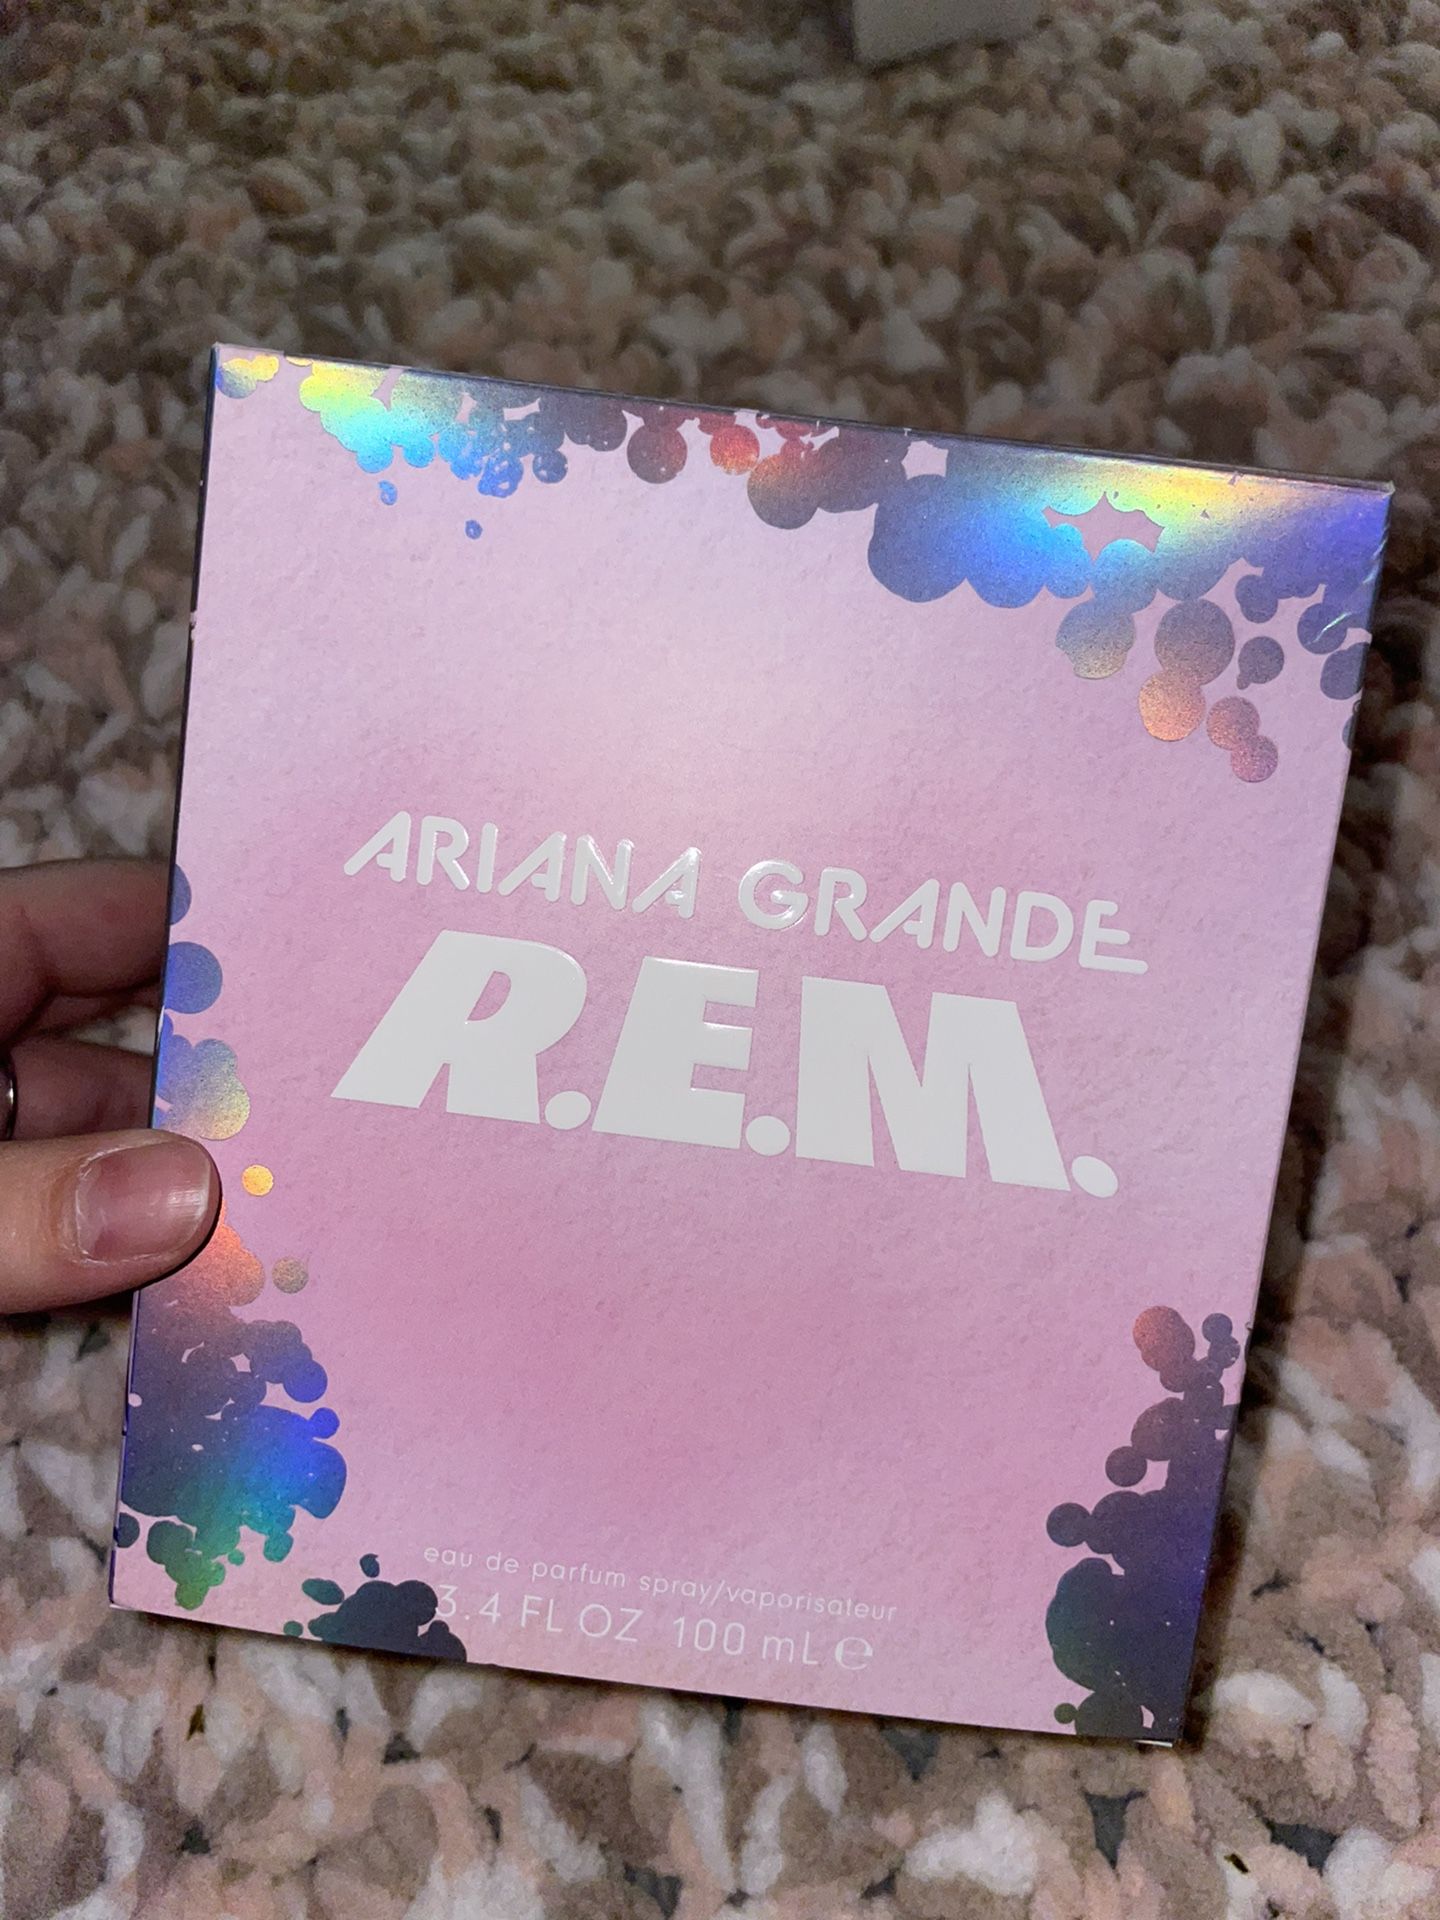 REM Ariana Grande Perfume 